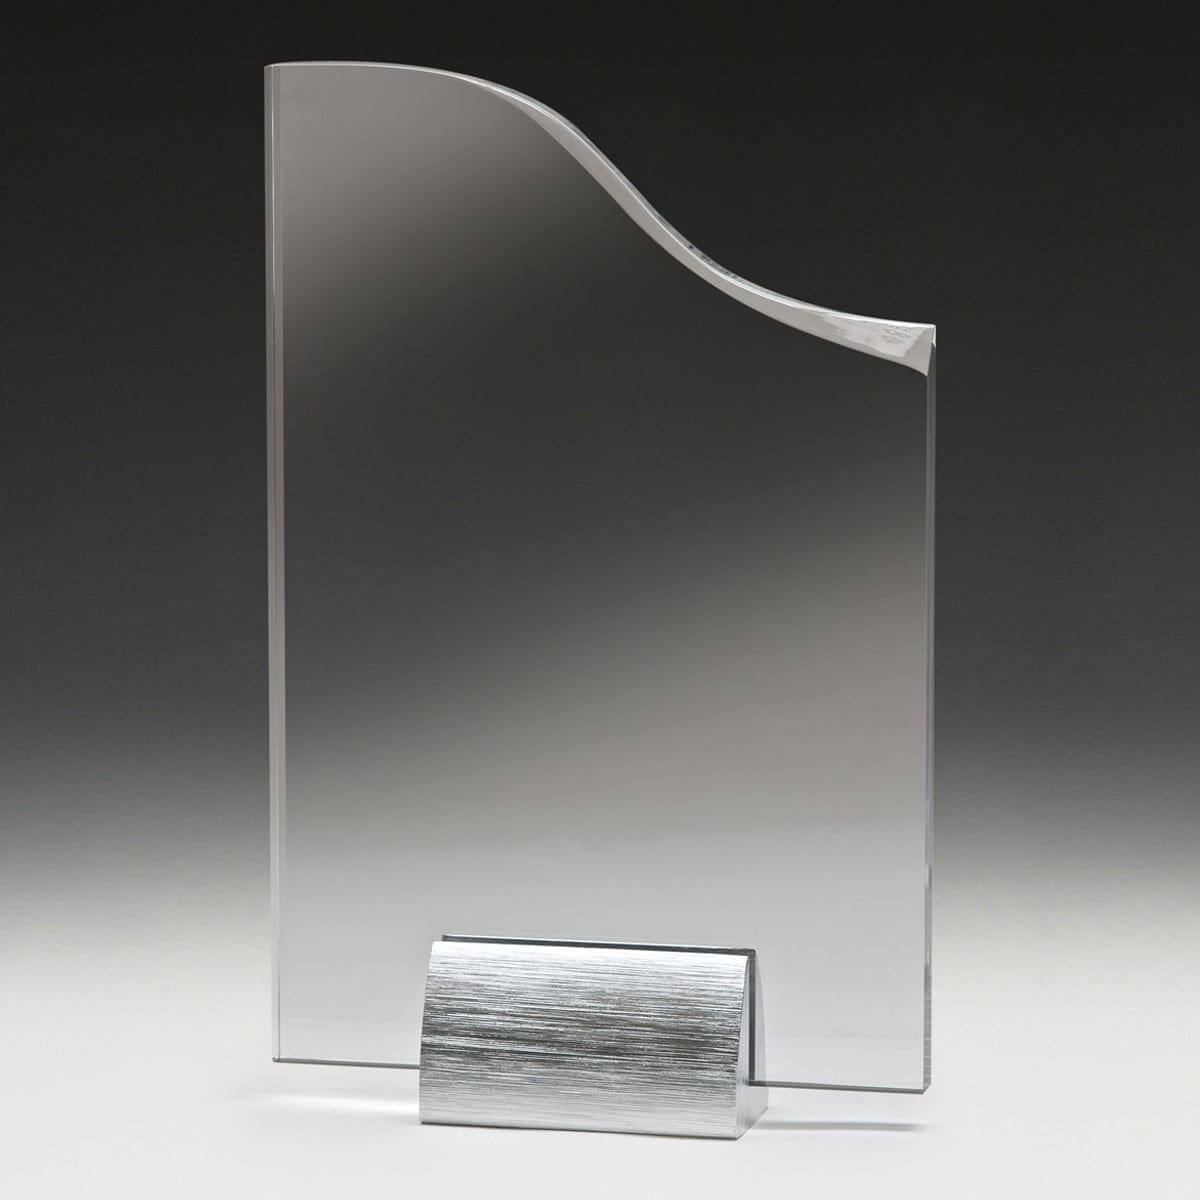 Acrylic Award Wave Design